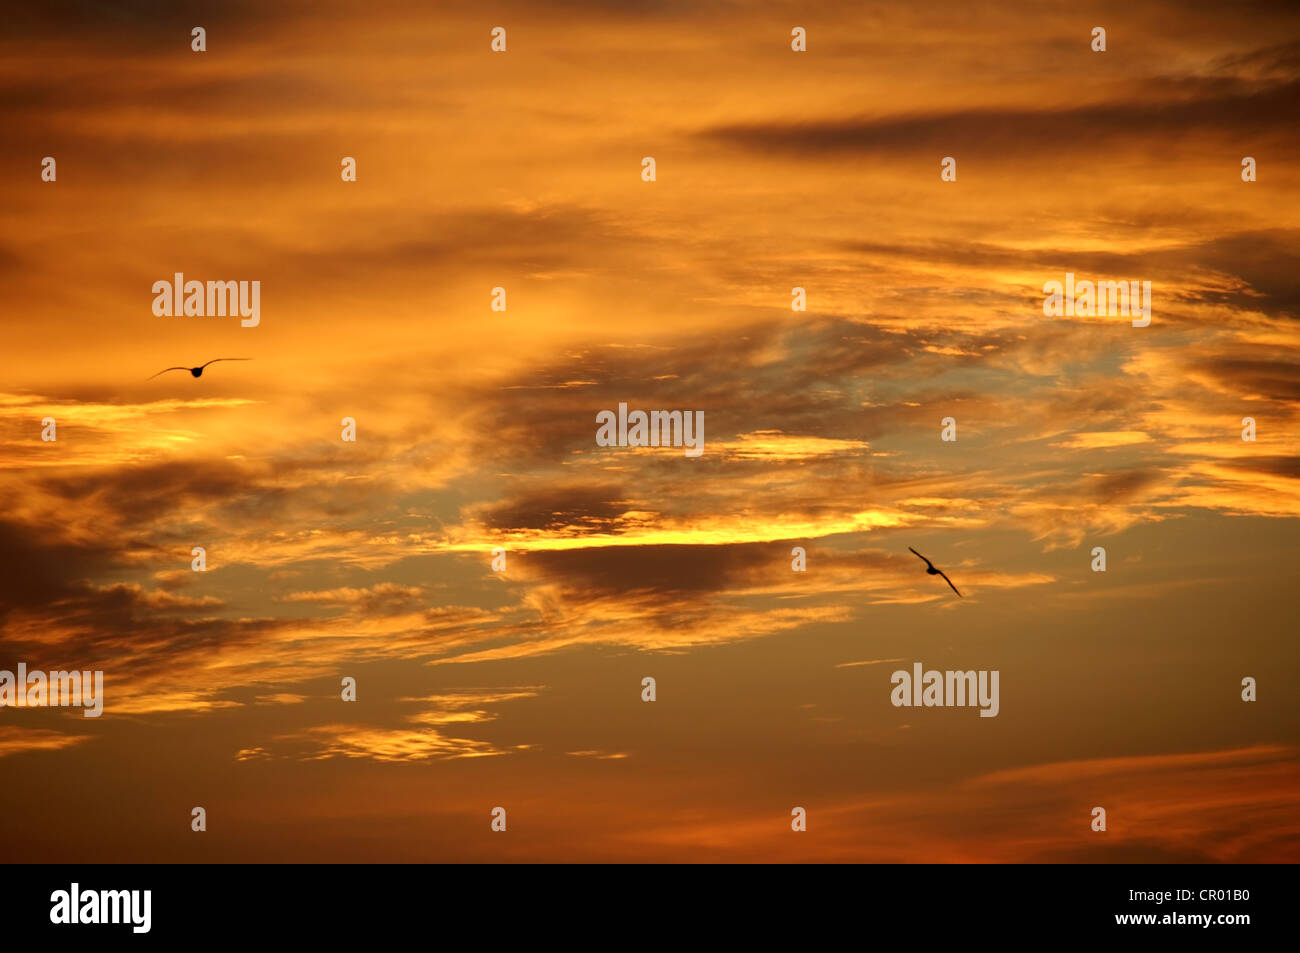 Sunset sky with clouds, Cape Tarhankut, Tarhan Qut, Crimea, Ukraine, Eastern Europe Stock Photo